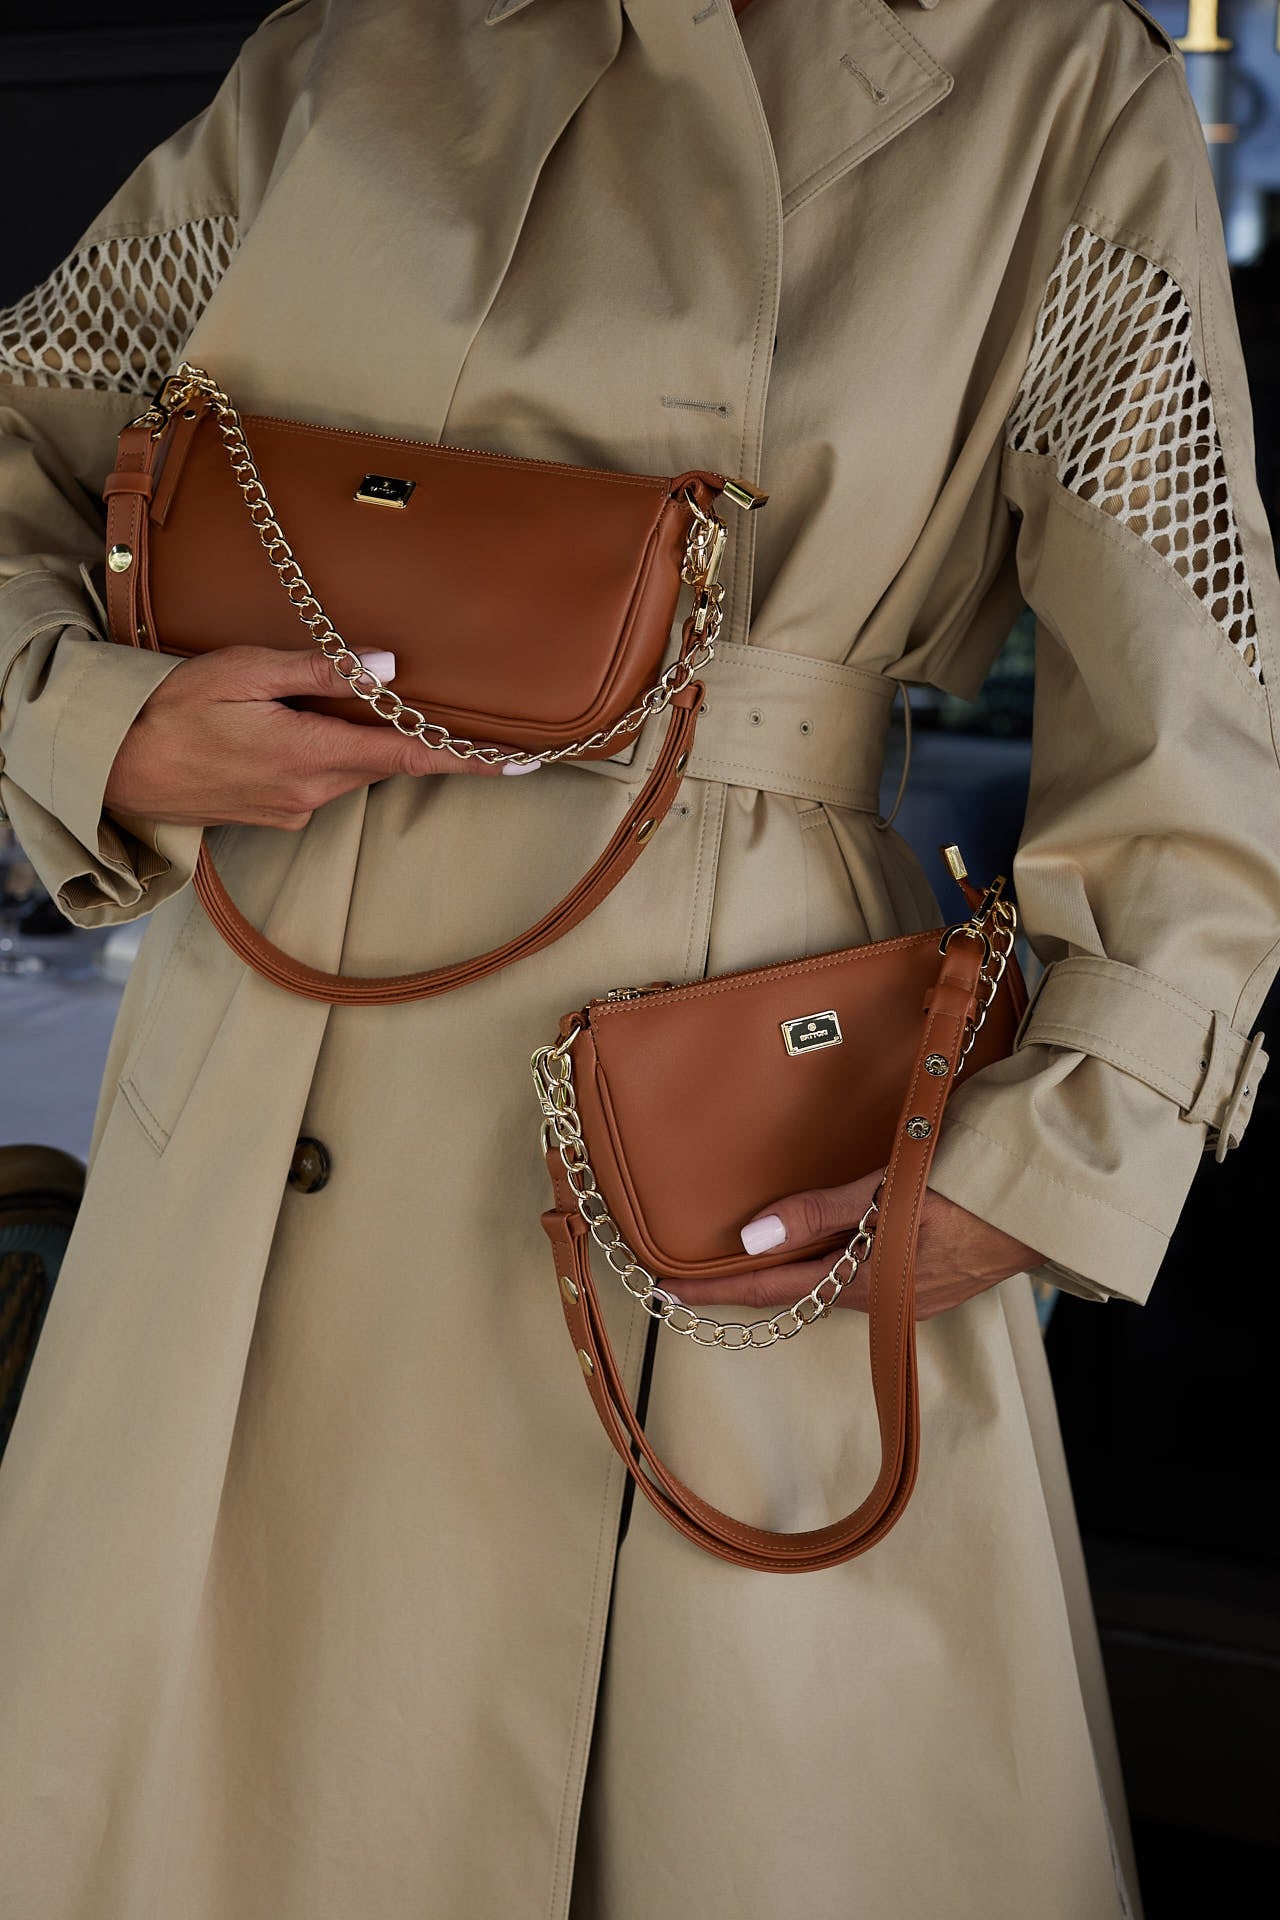 HARLEY COGNAC women's leather handbag